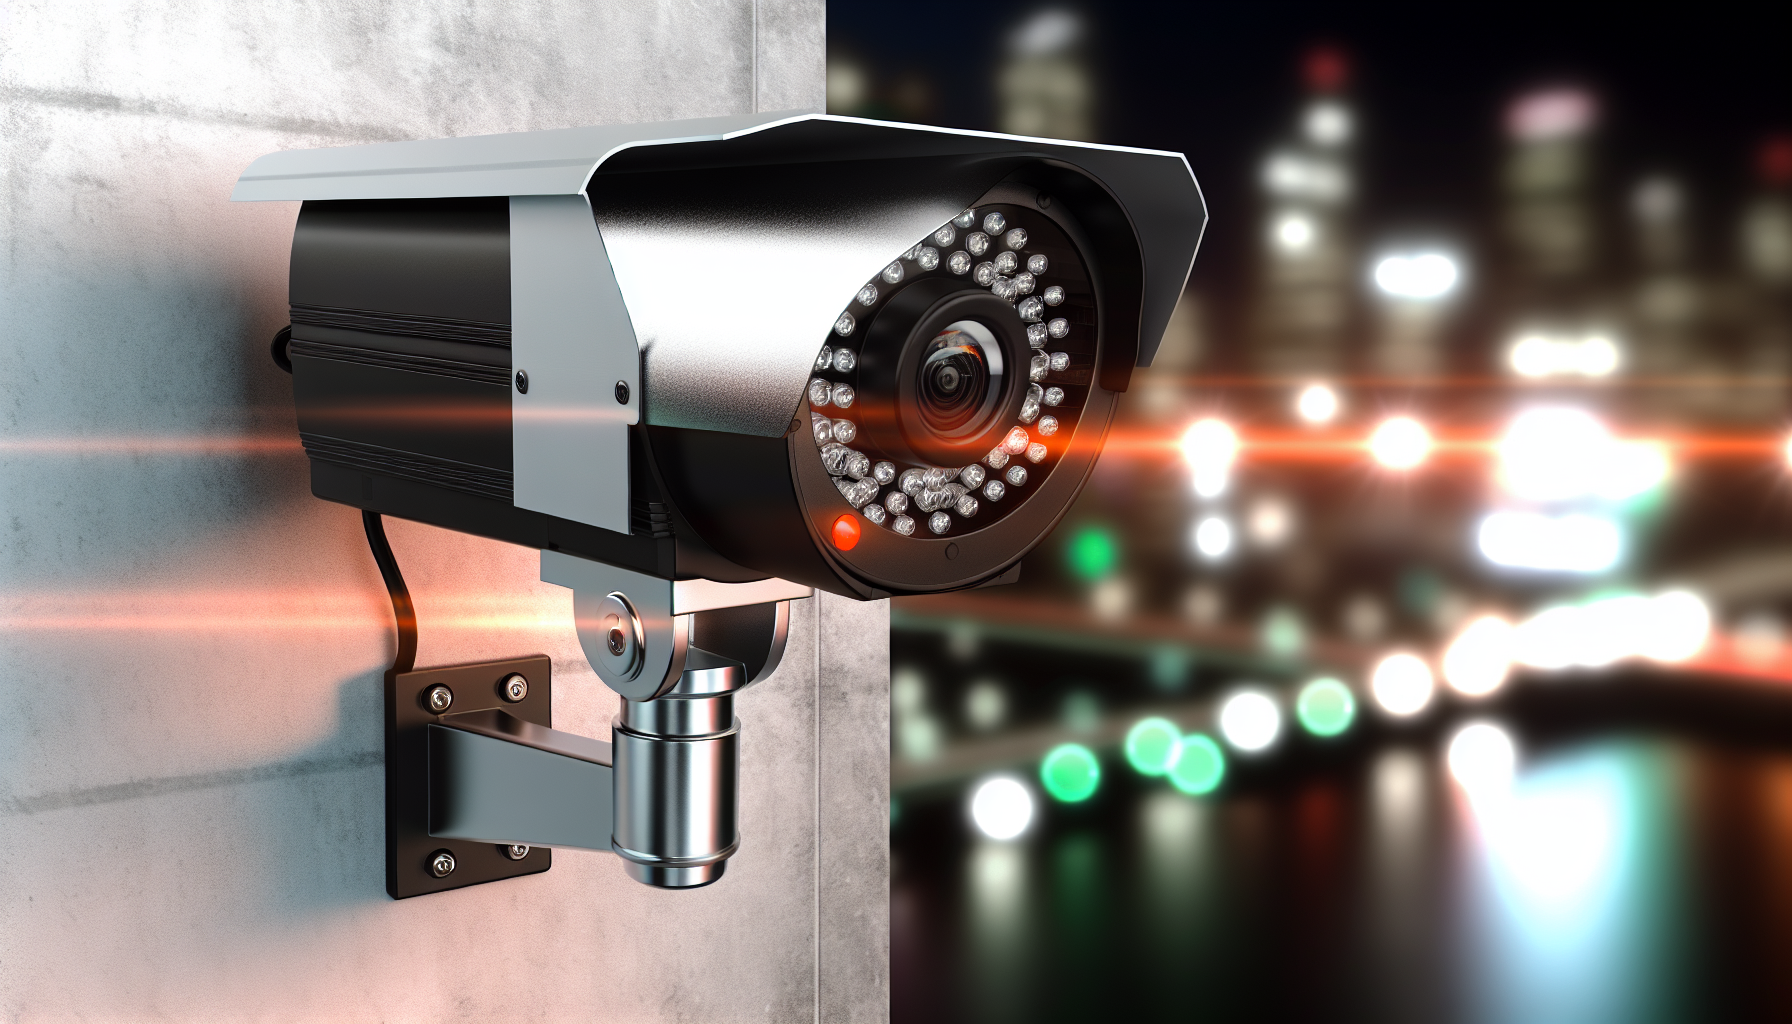 High-quality surveillance camera providing clear footage